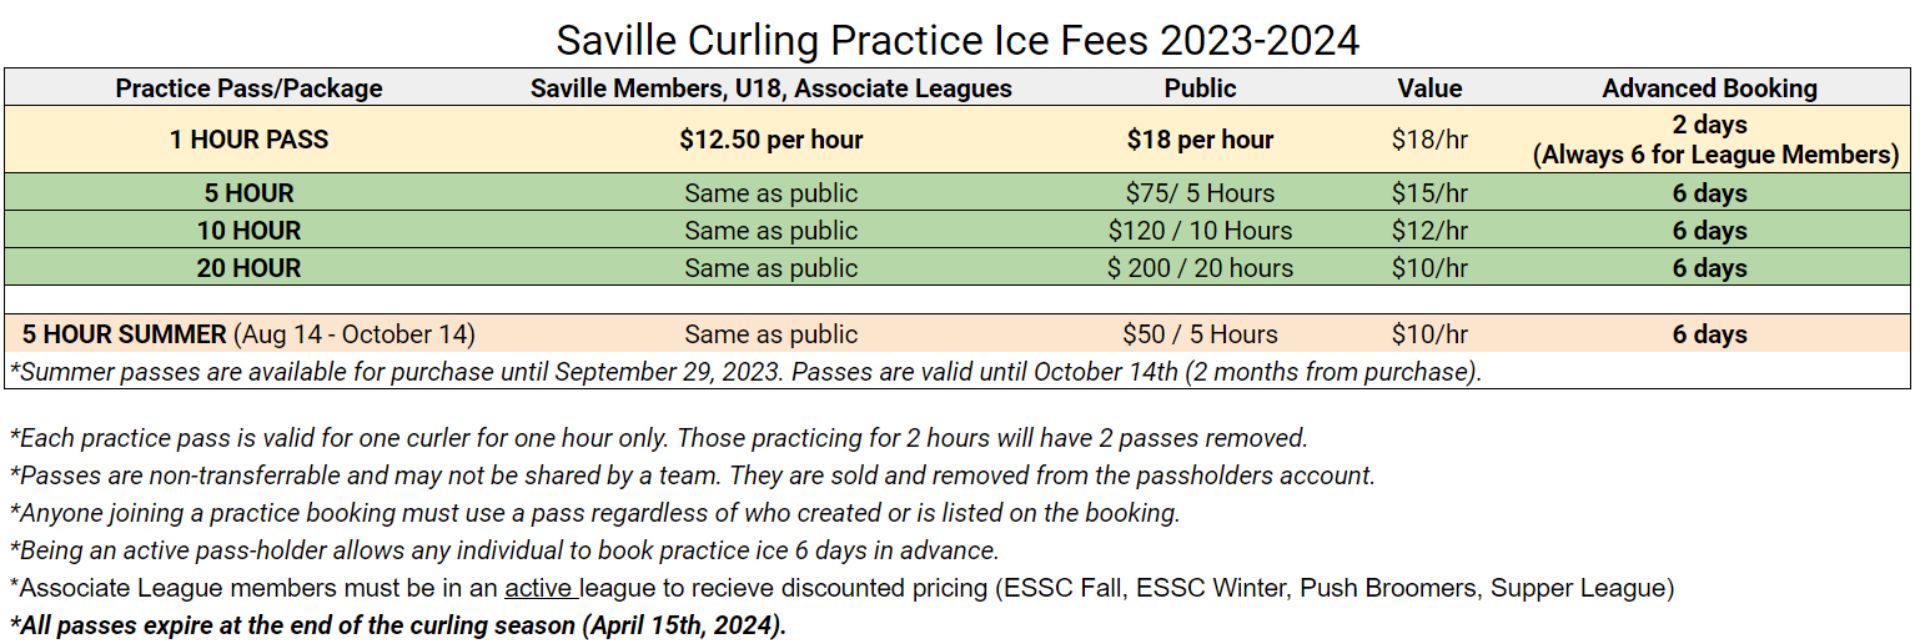 saville-curling-practice-ice-fees-2023.jpg